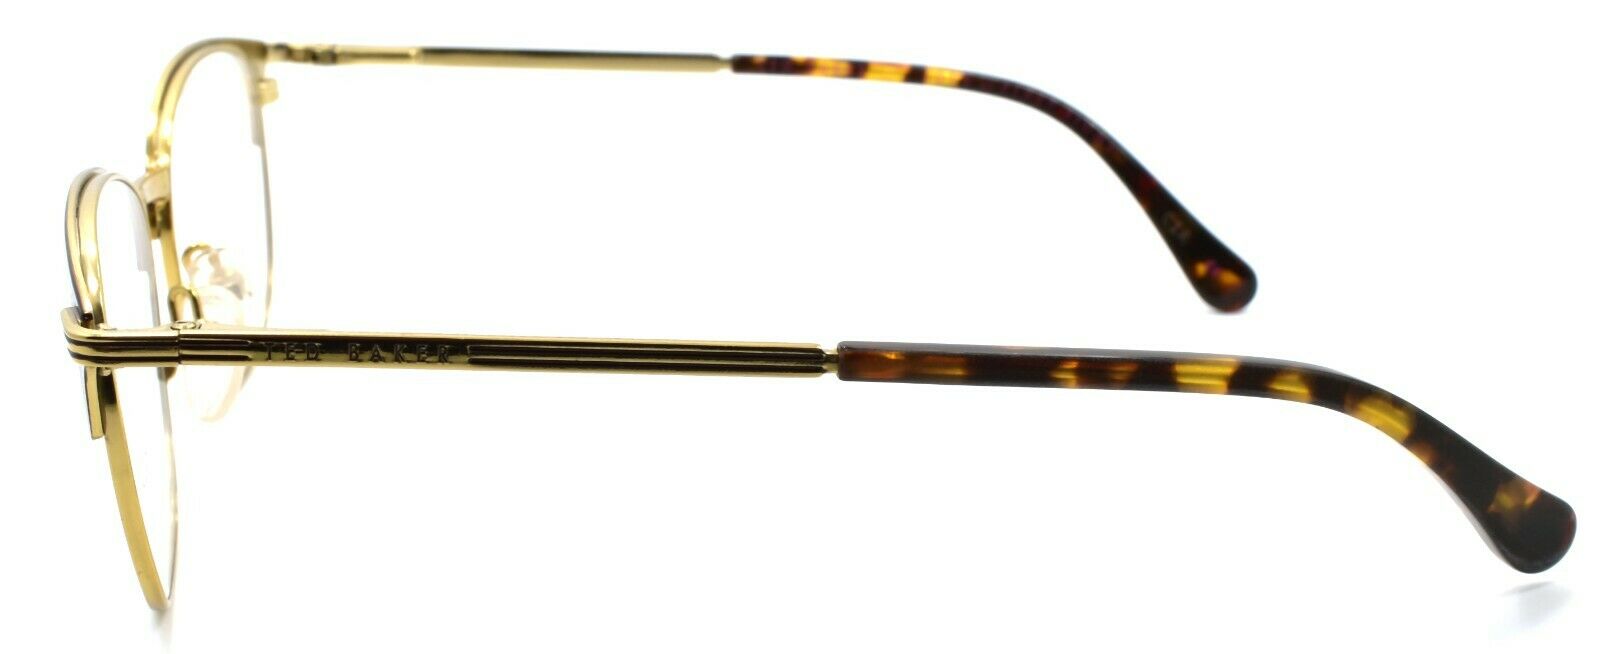 3-Ted Baker Access 2218 104 Women's Glasses Frames Petite 48-16-135 Brown / Gold-4894327098651-IKSpecs